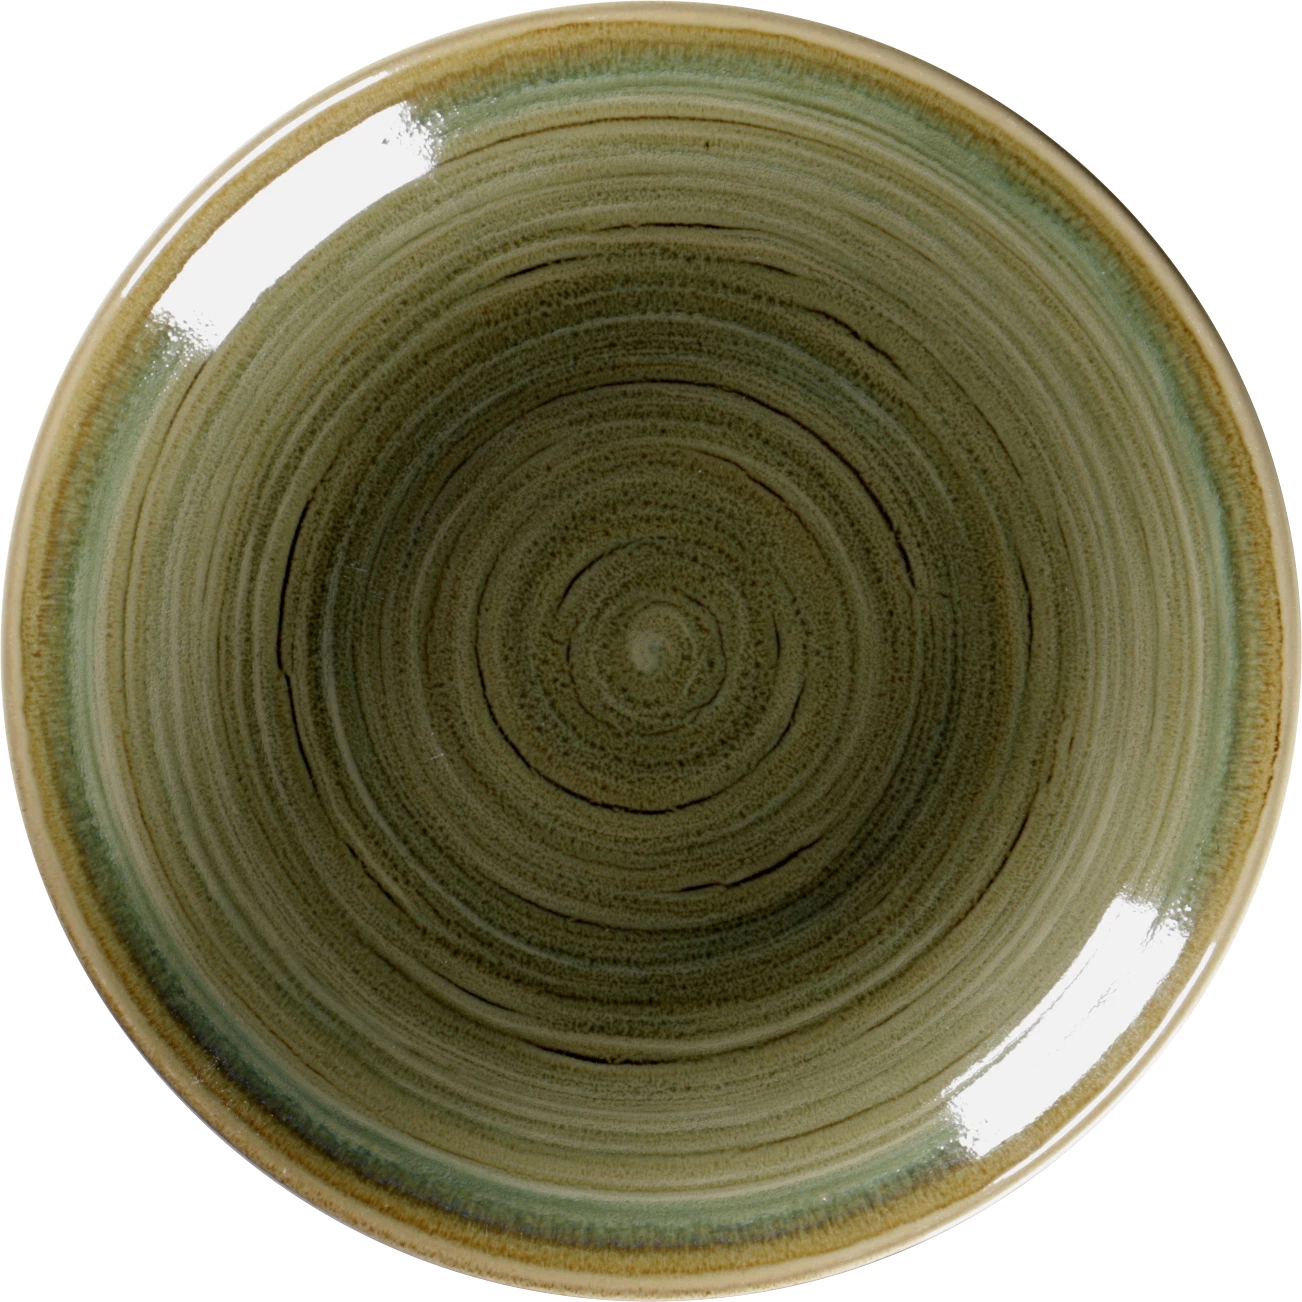 RAK Spot dyb tallerken, emerald, ø23 cm